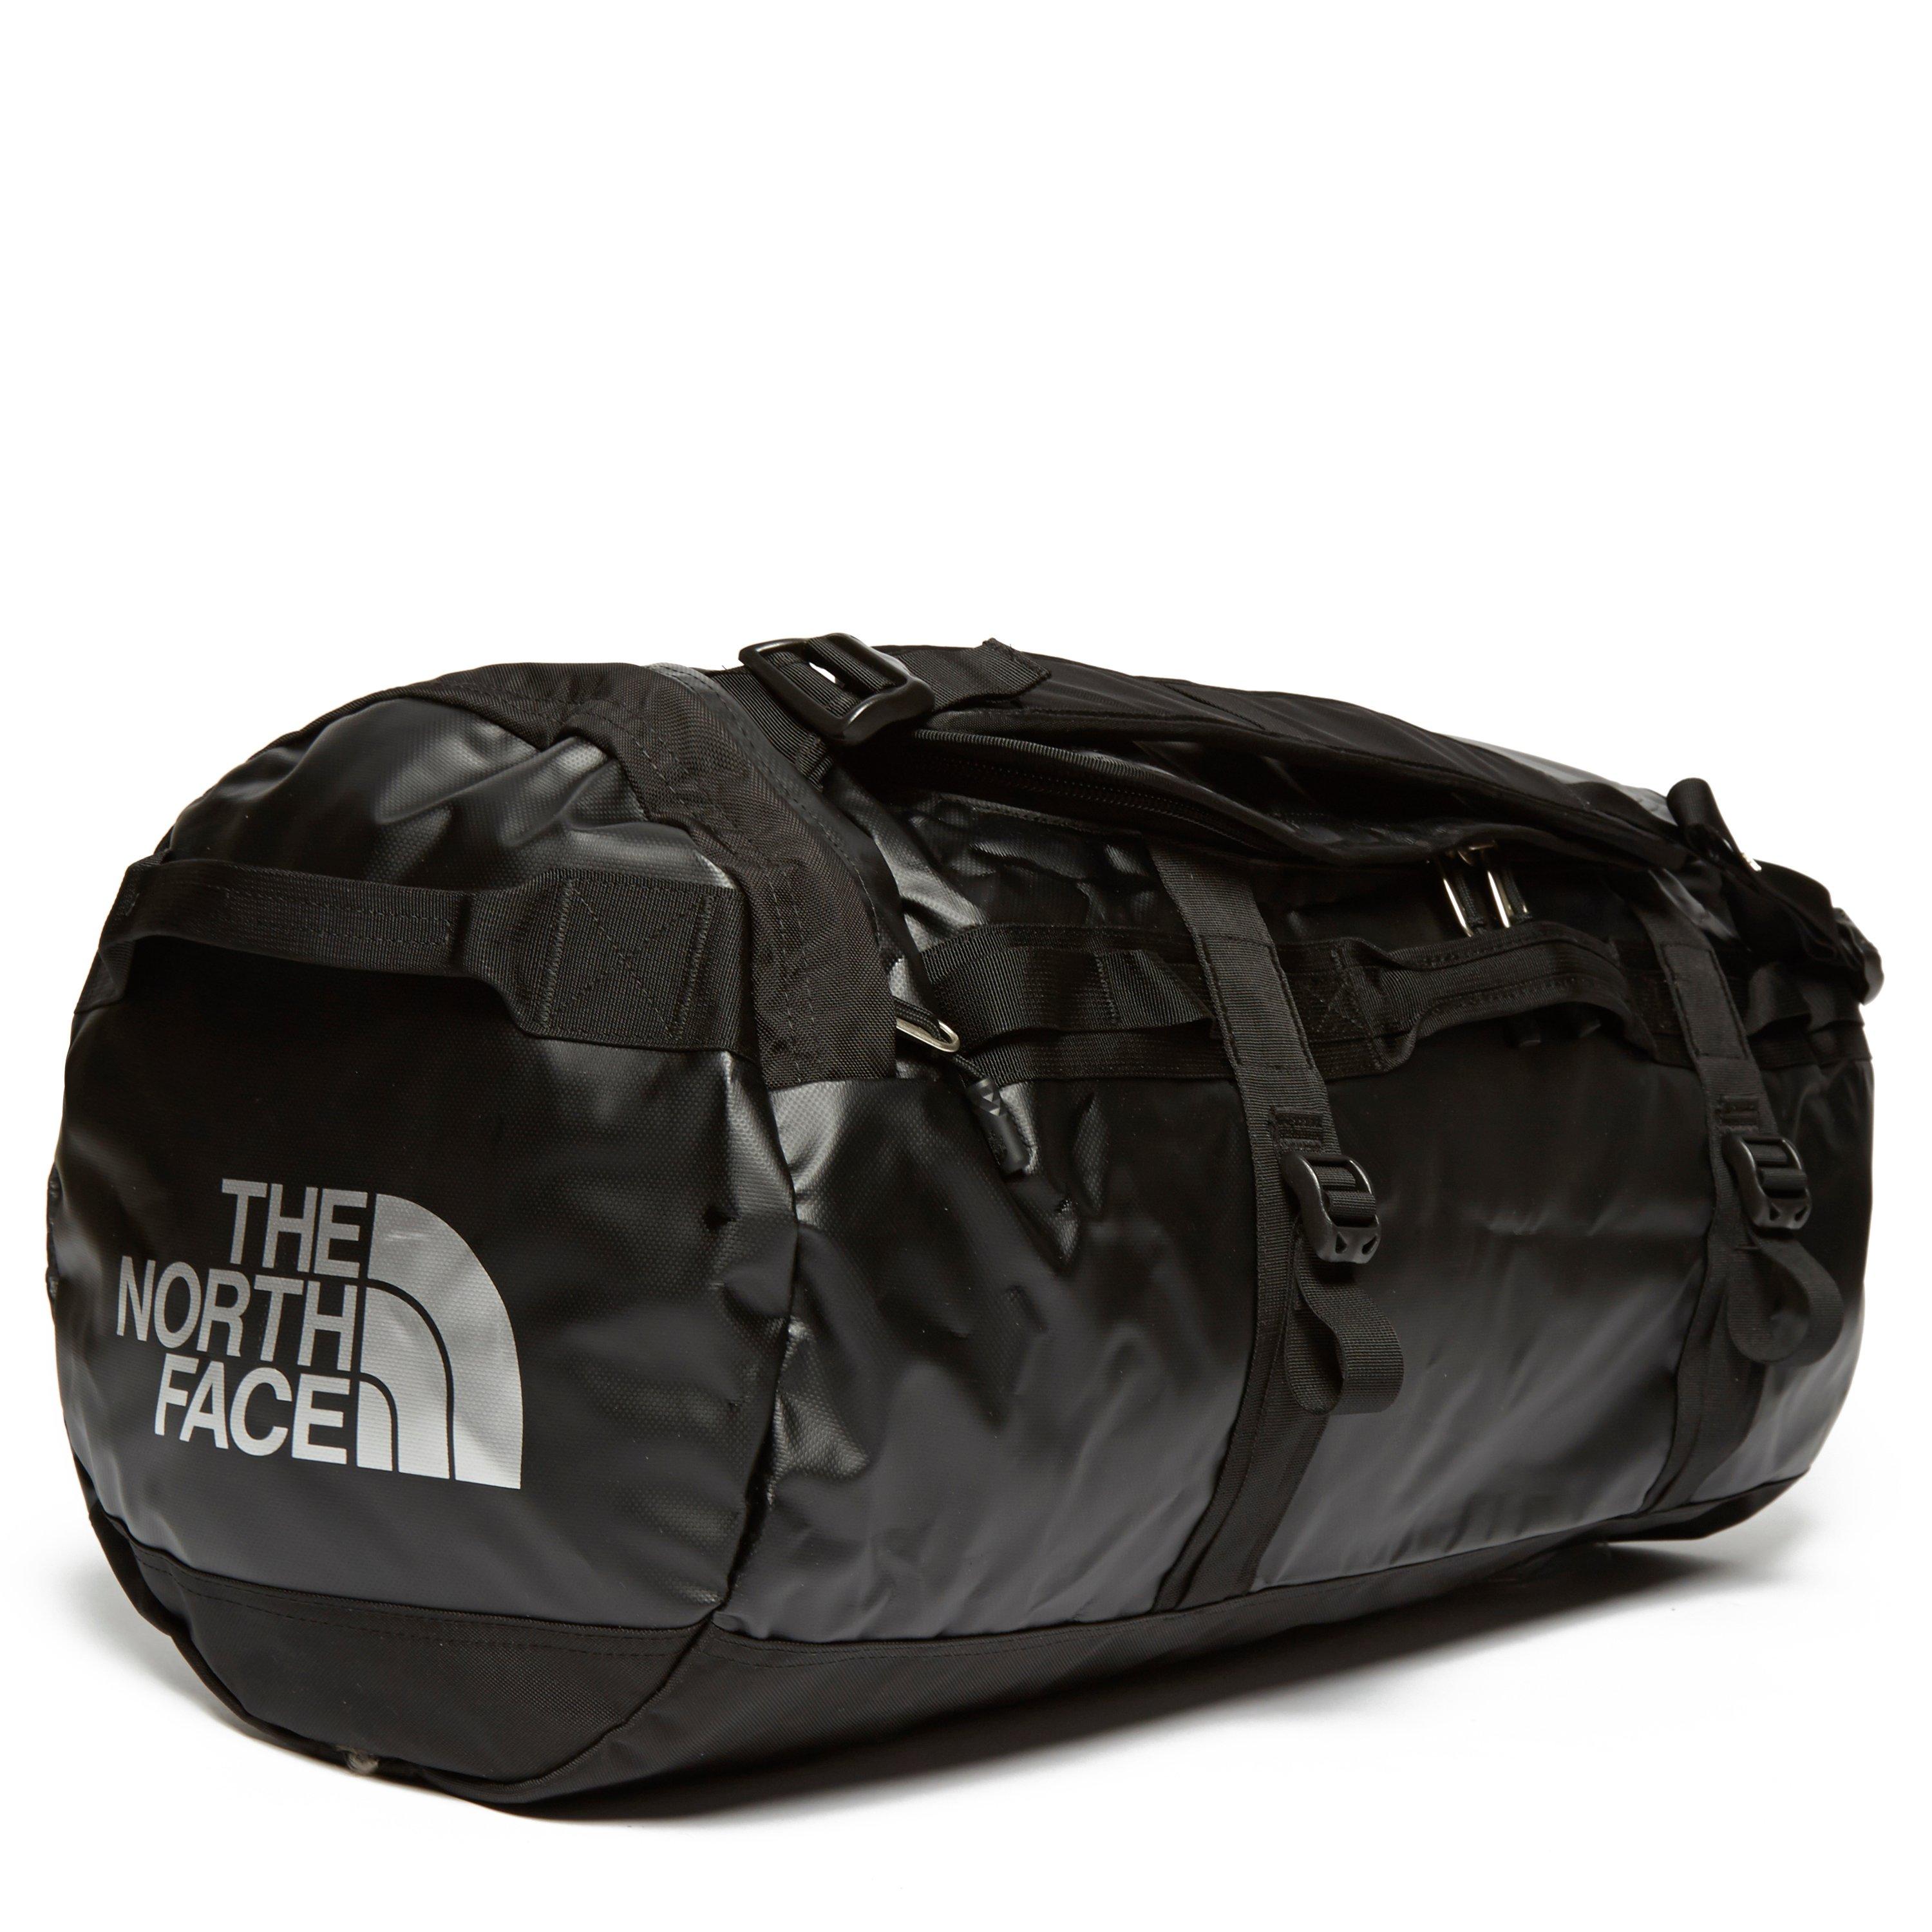 The North Face Duffel Bag Sale :: Keweenaw Bay Indian Community